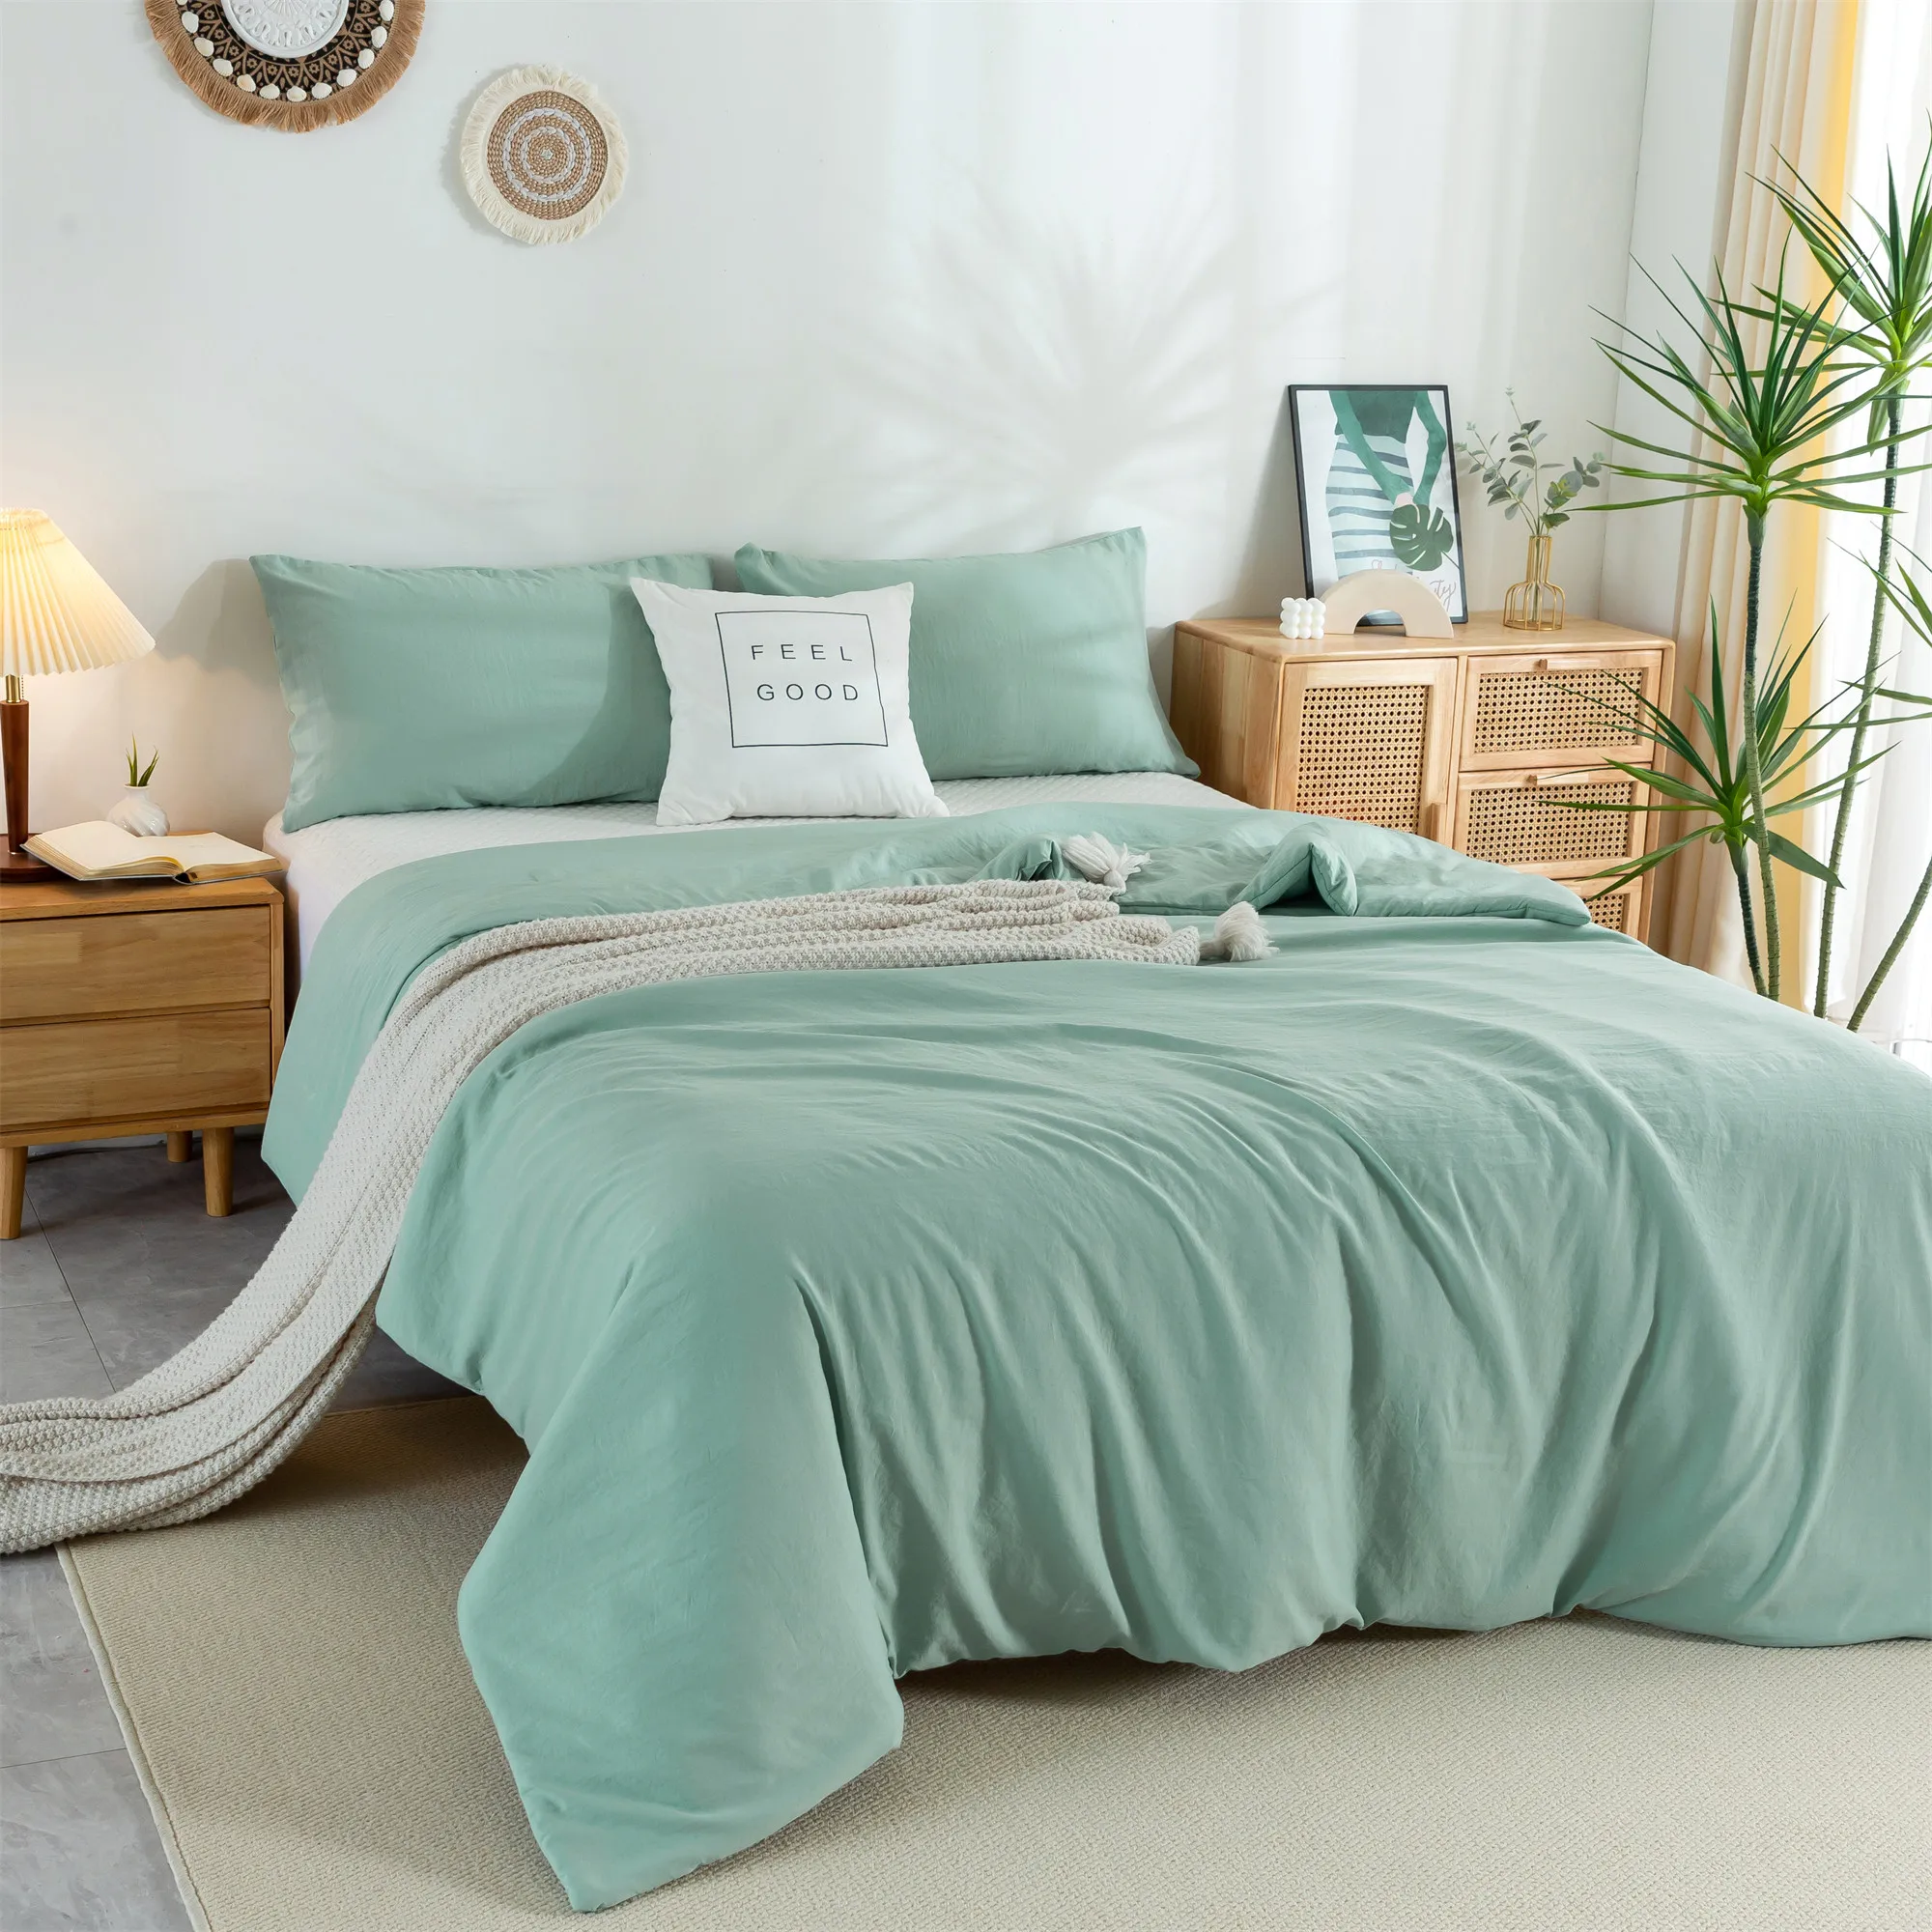 

Twin XL Comforter Duvet Insert All Season sage green Bedding Set Breathable Lightweight Poly Cotton with Pillow Shams